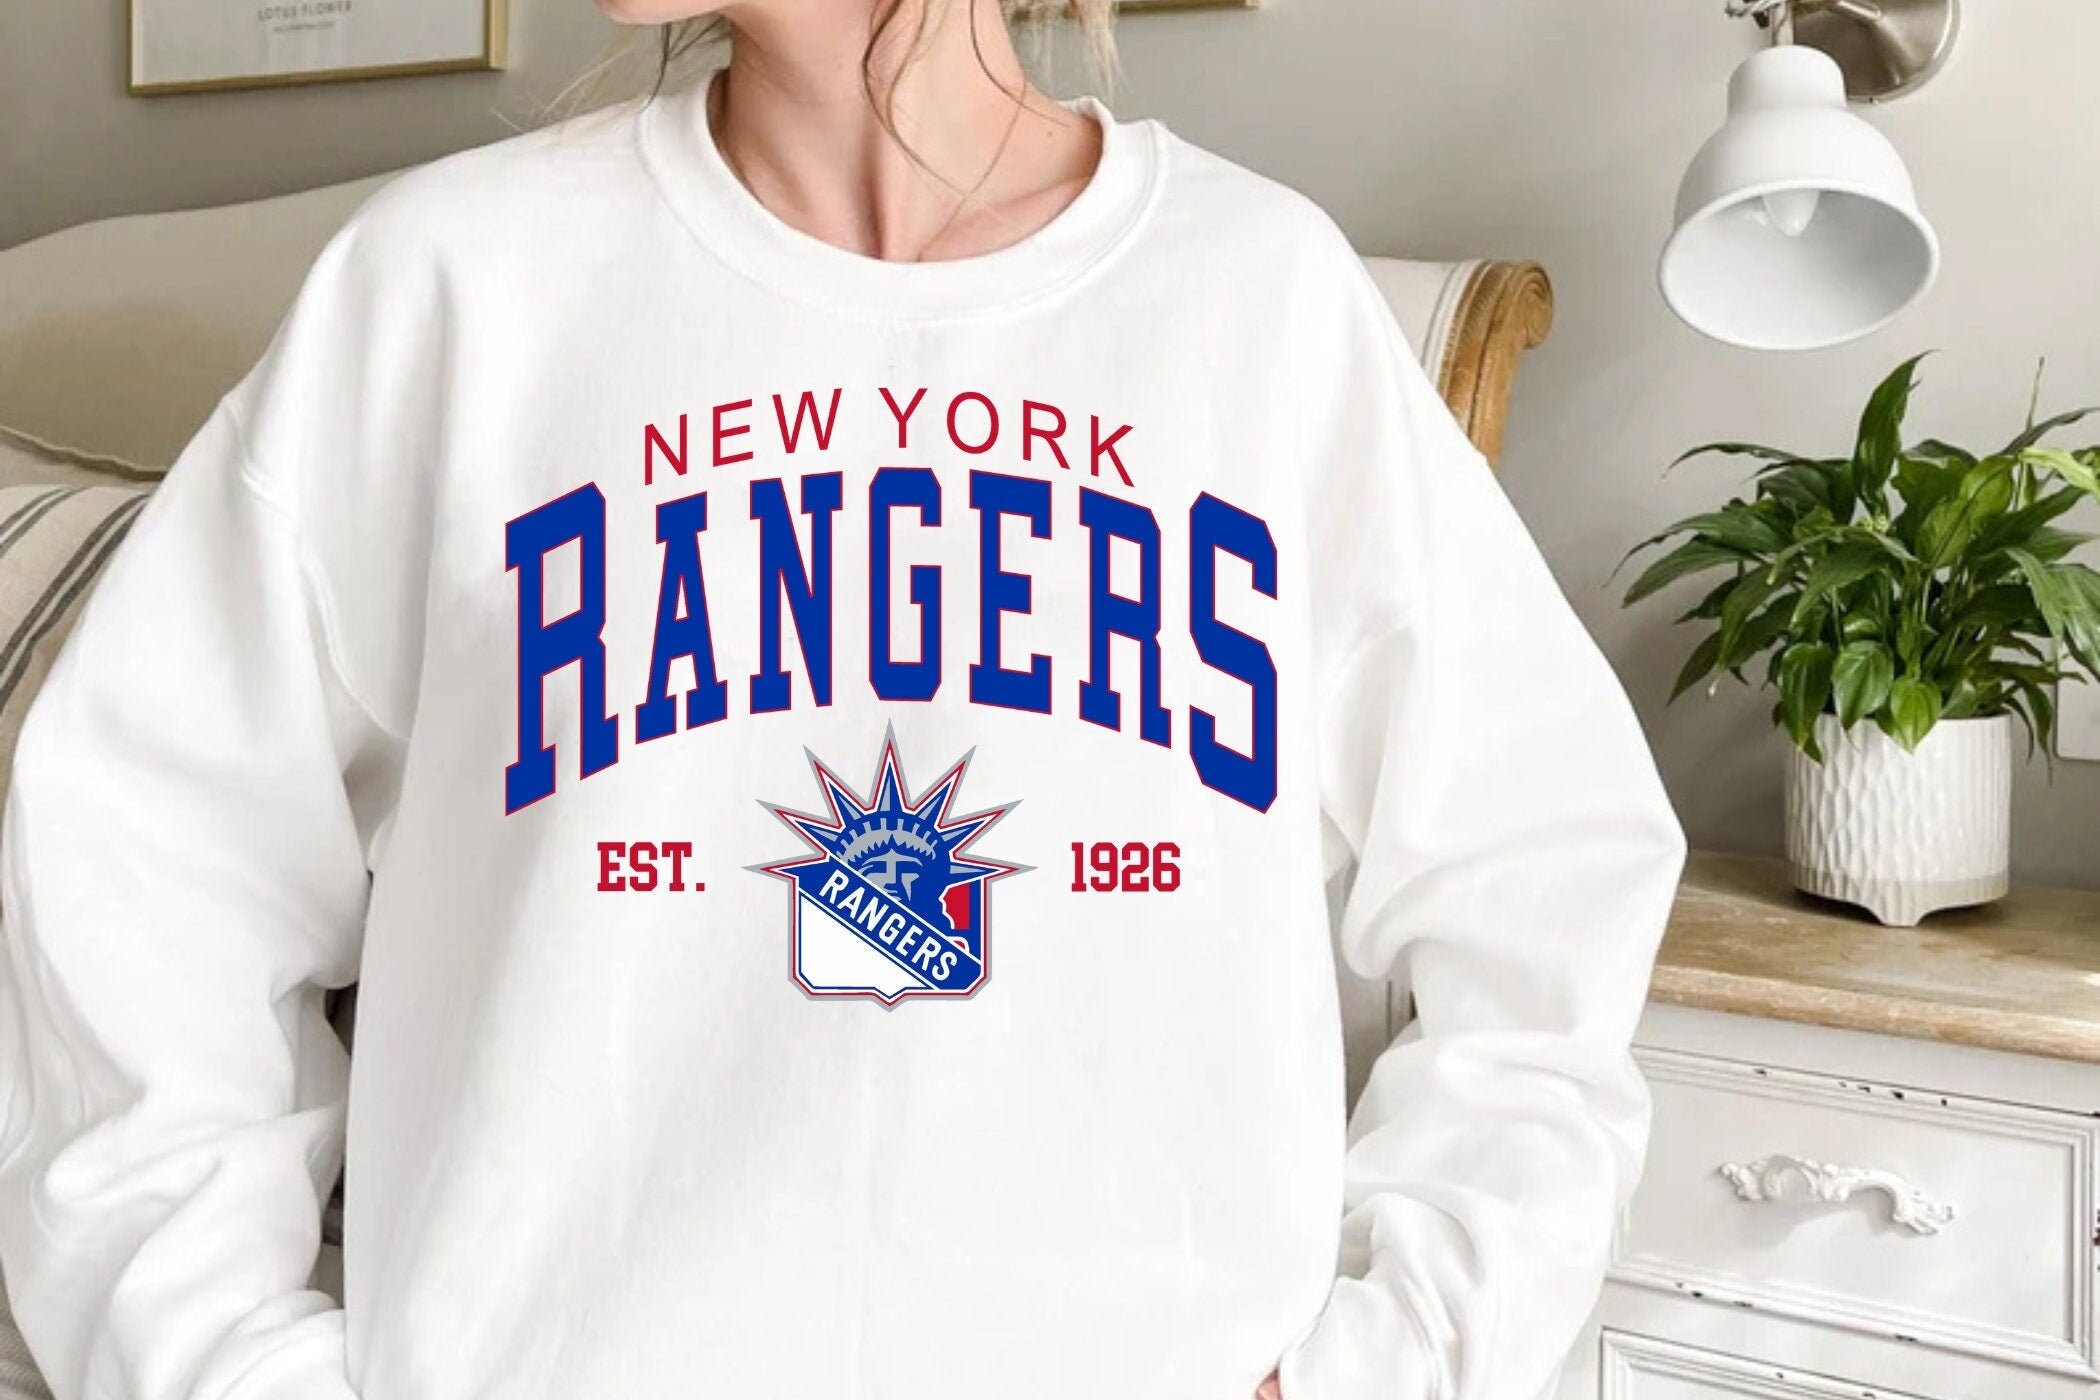 Artemi Panarin New York Rangers Jerseys, Rangers Jersey Deals, Rangers  Breakaway Jerseys, Rangers Hockey Sweater